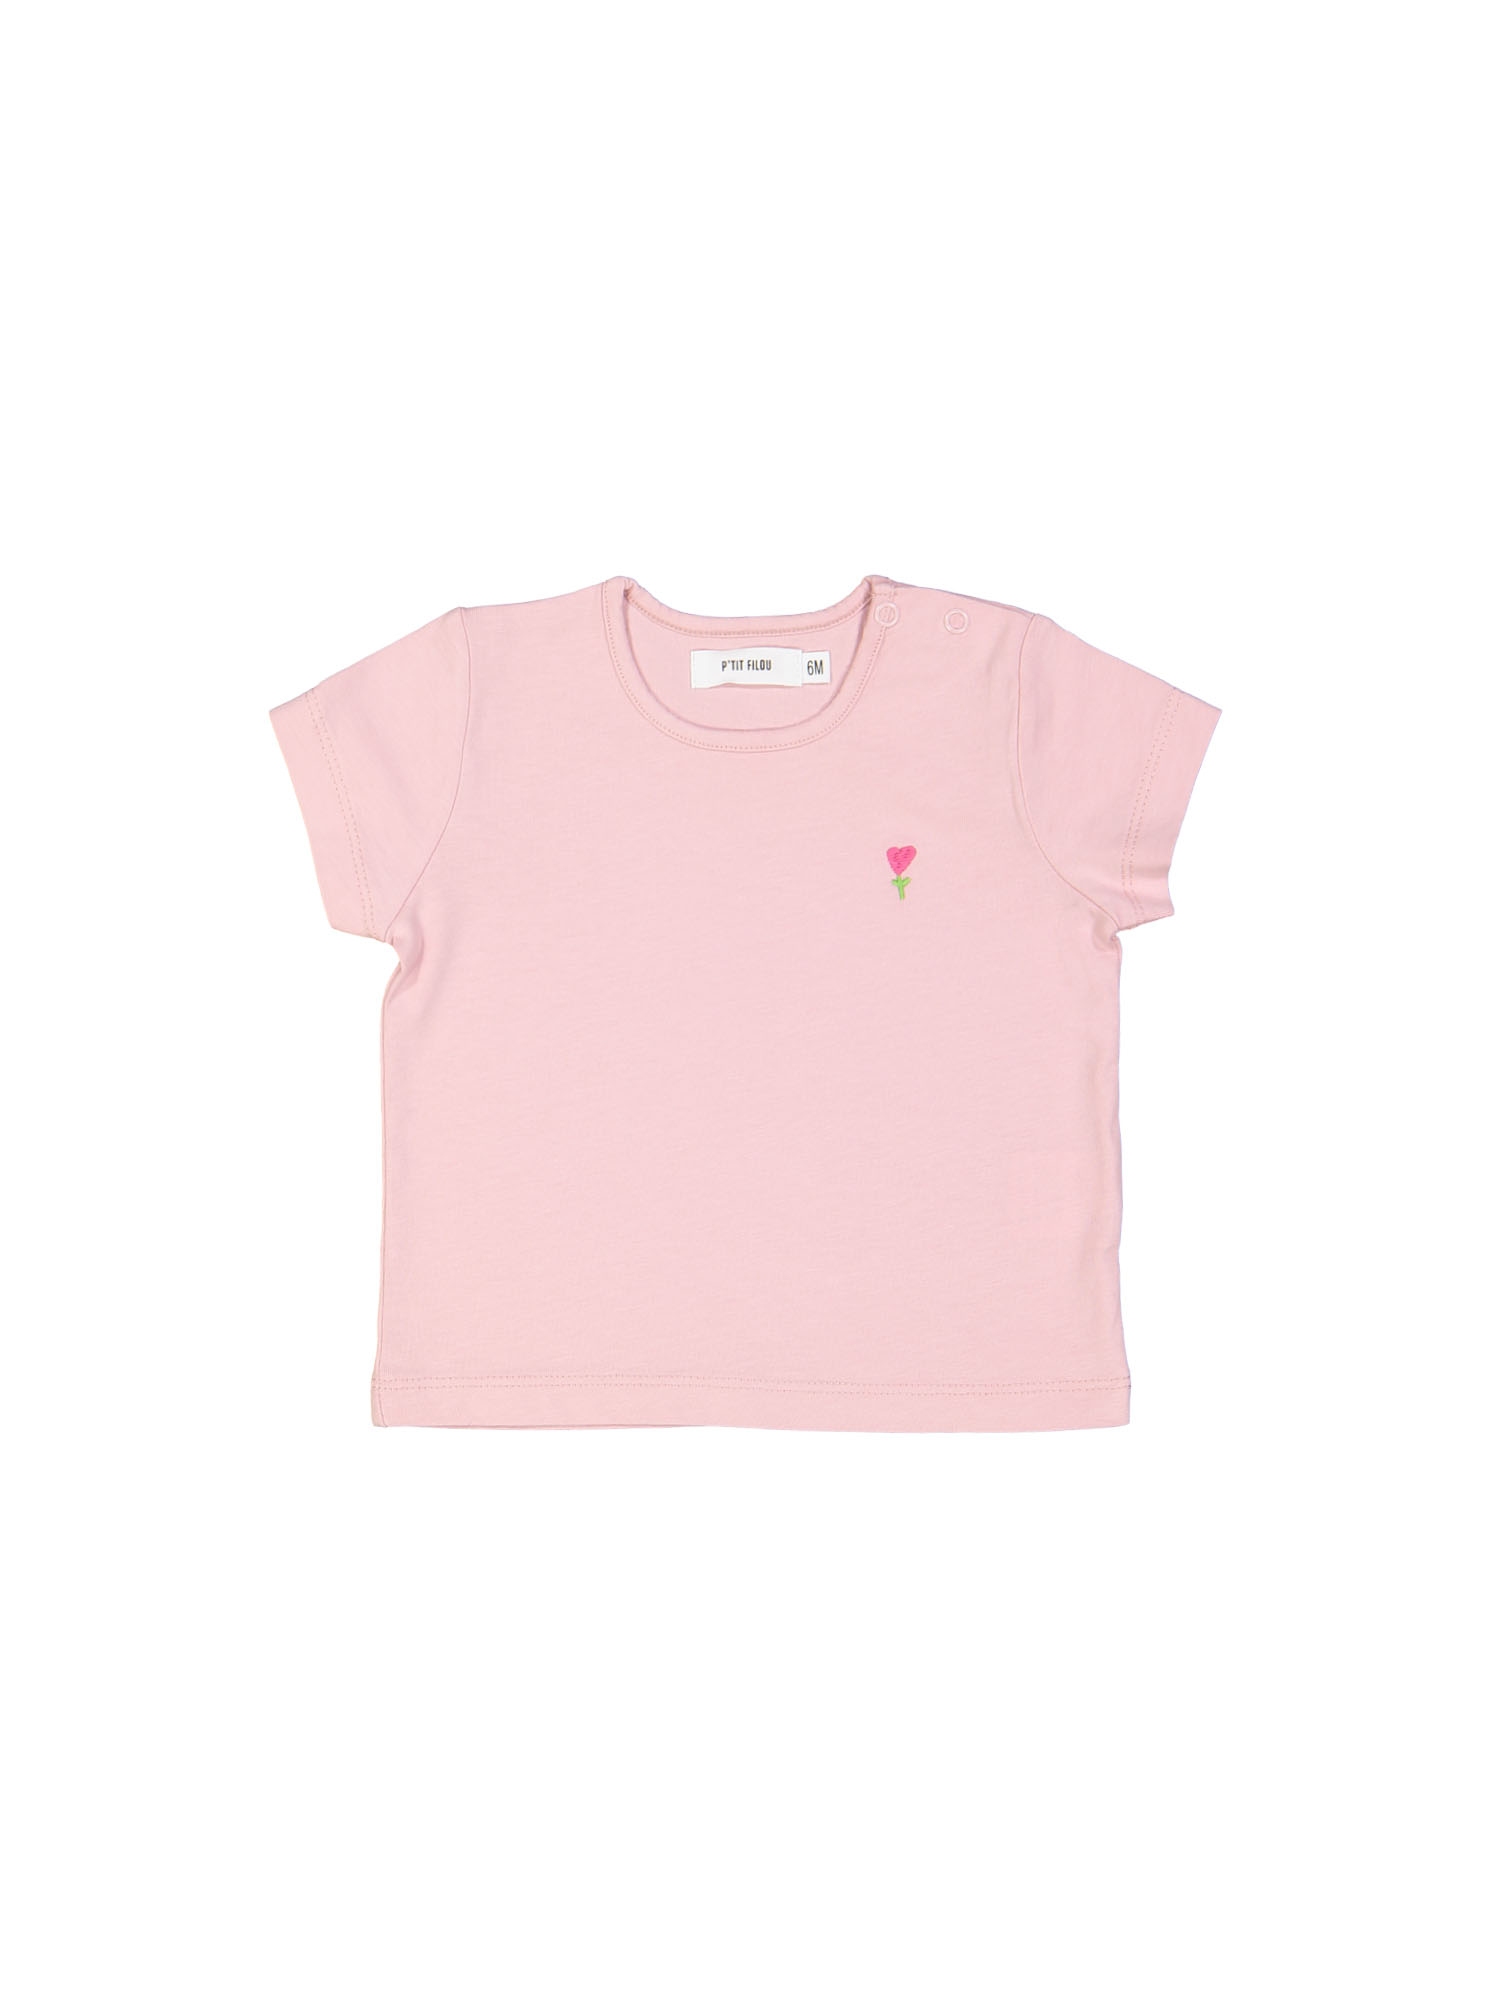 T-shirt mini love flower roze 06m